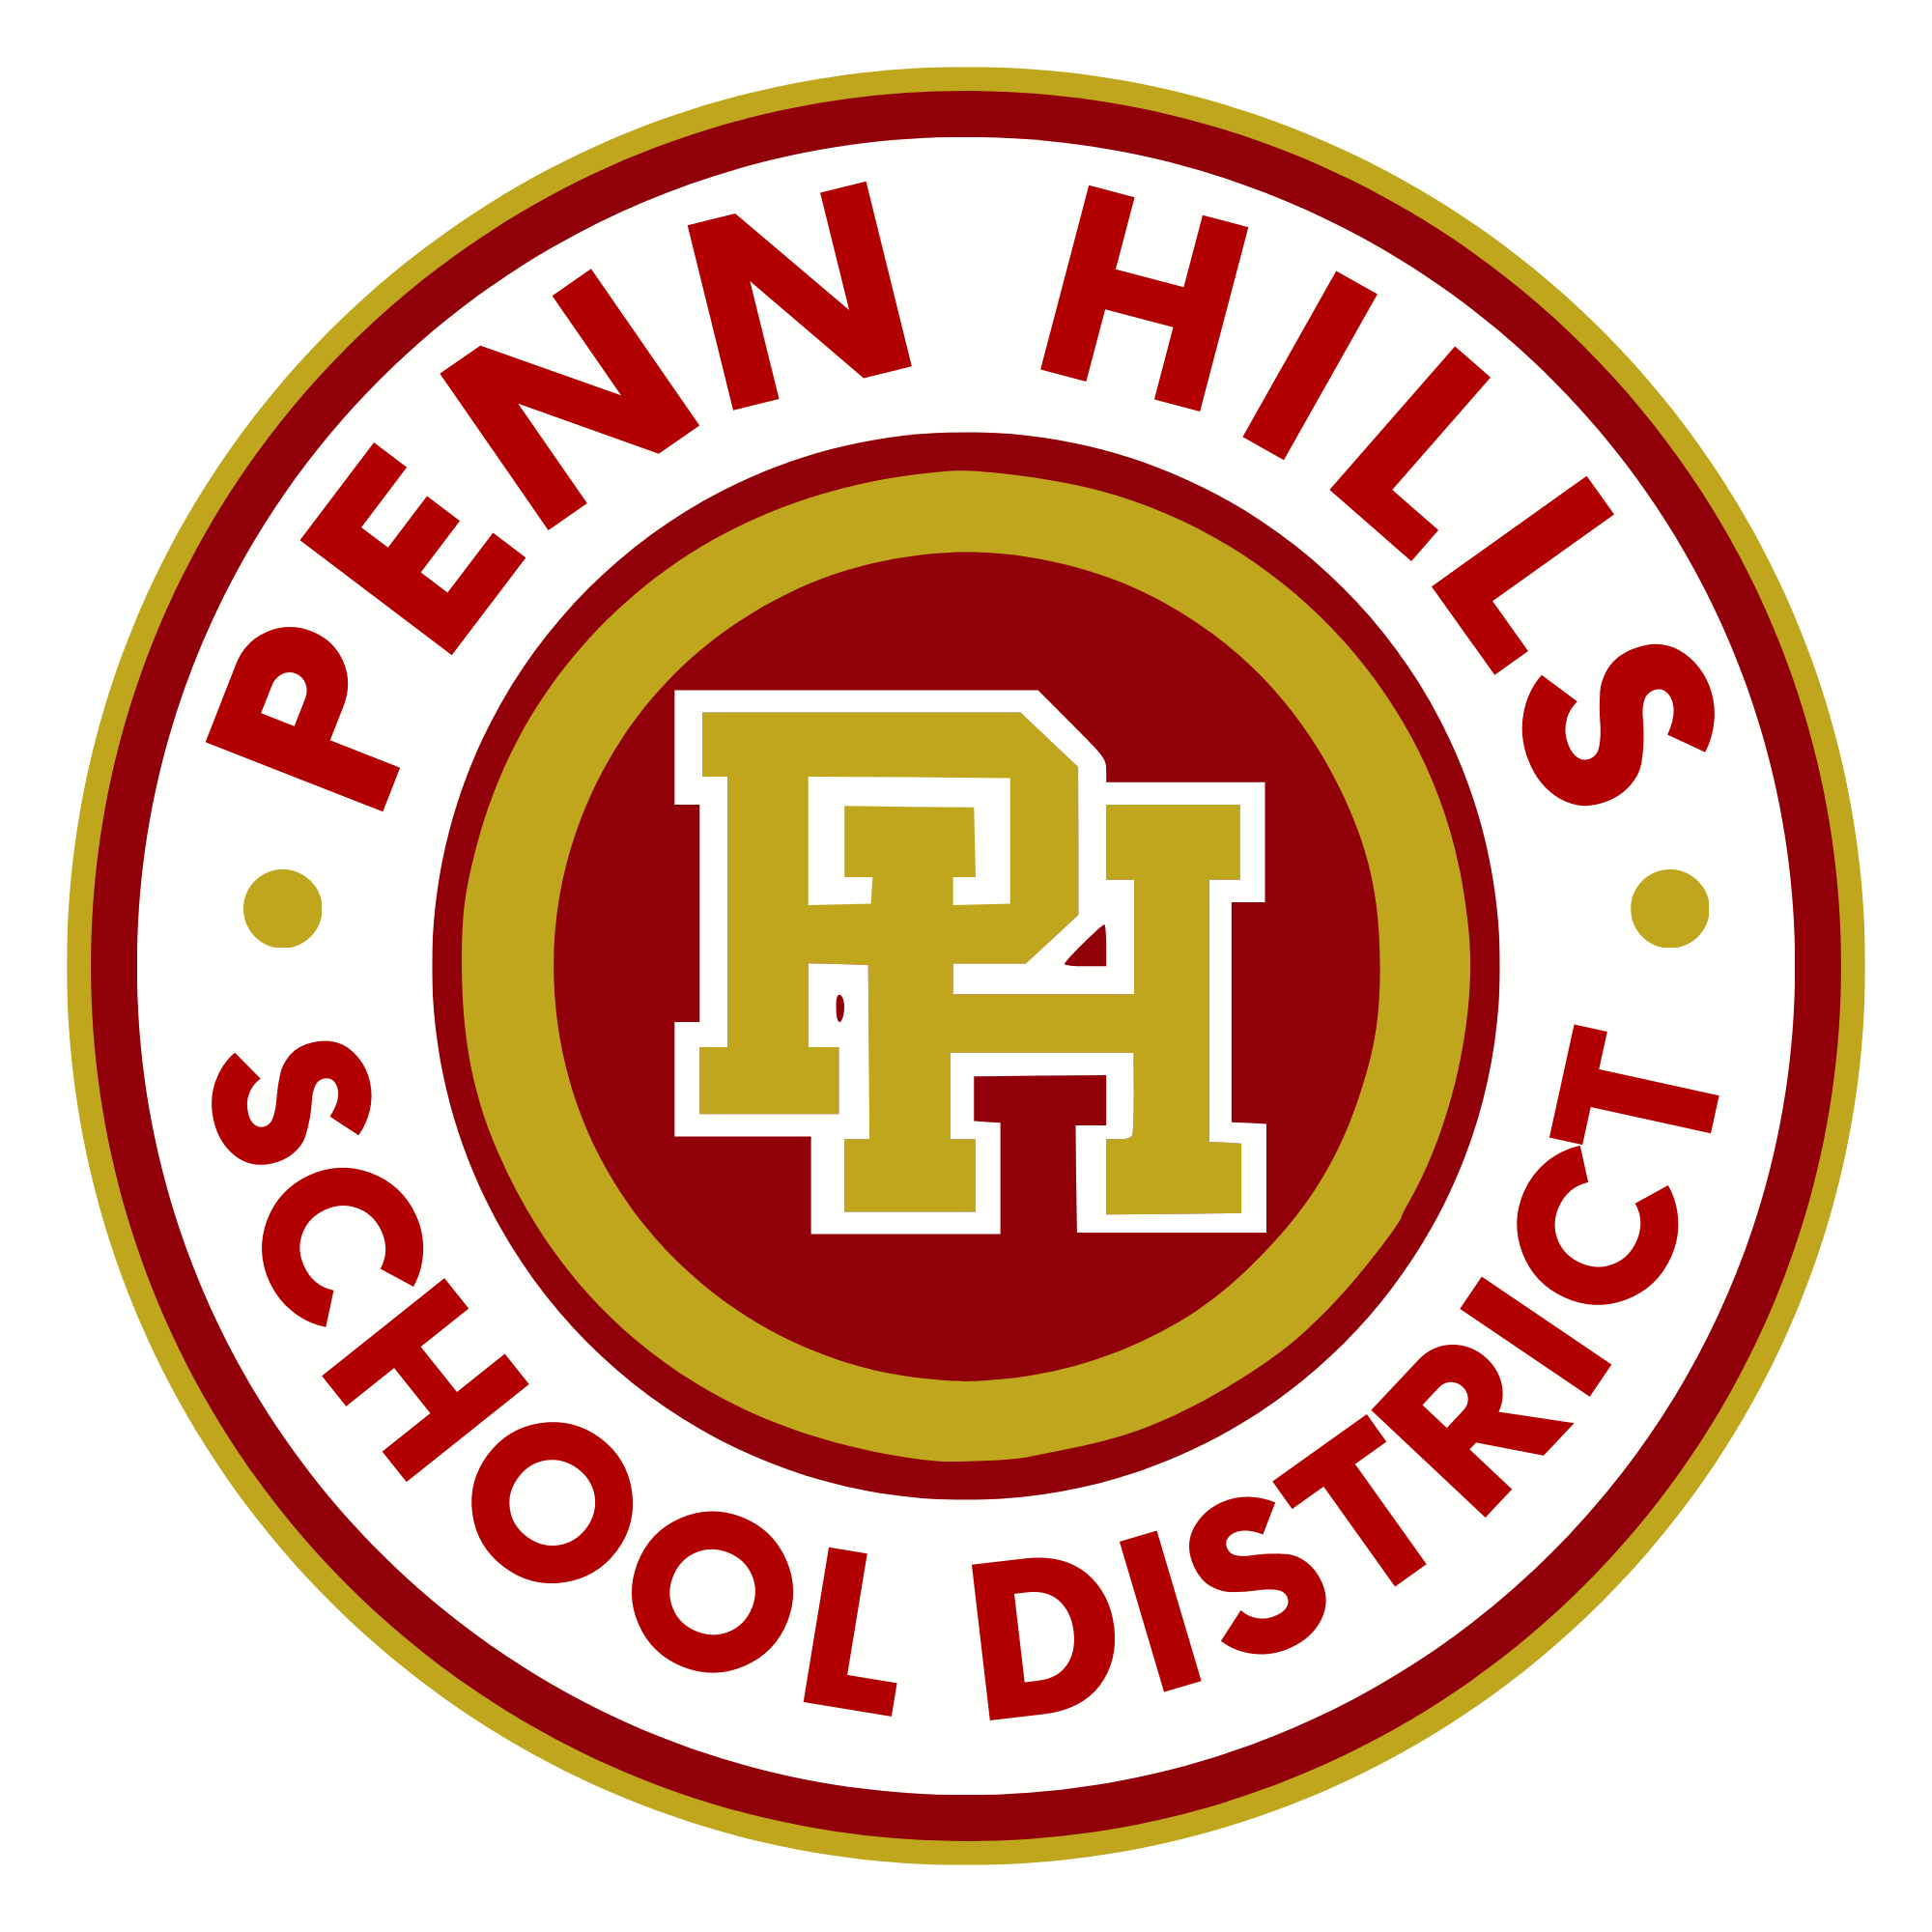 Penn Hills School District Logo